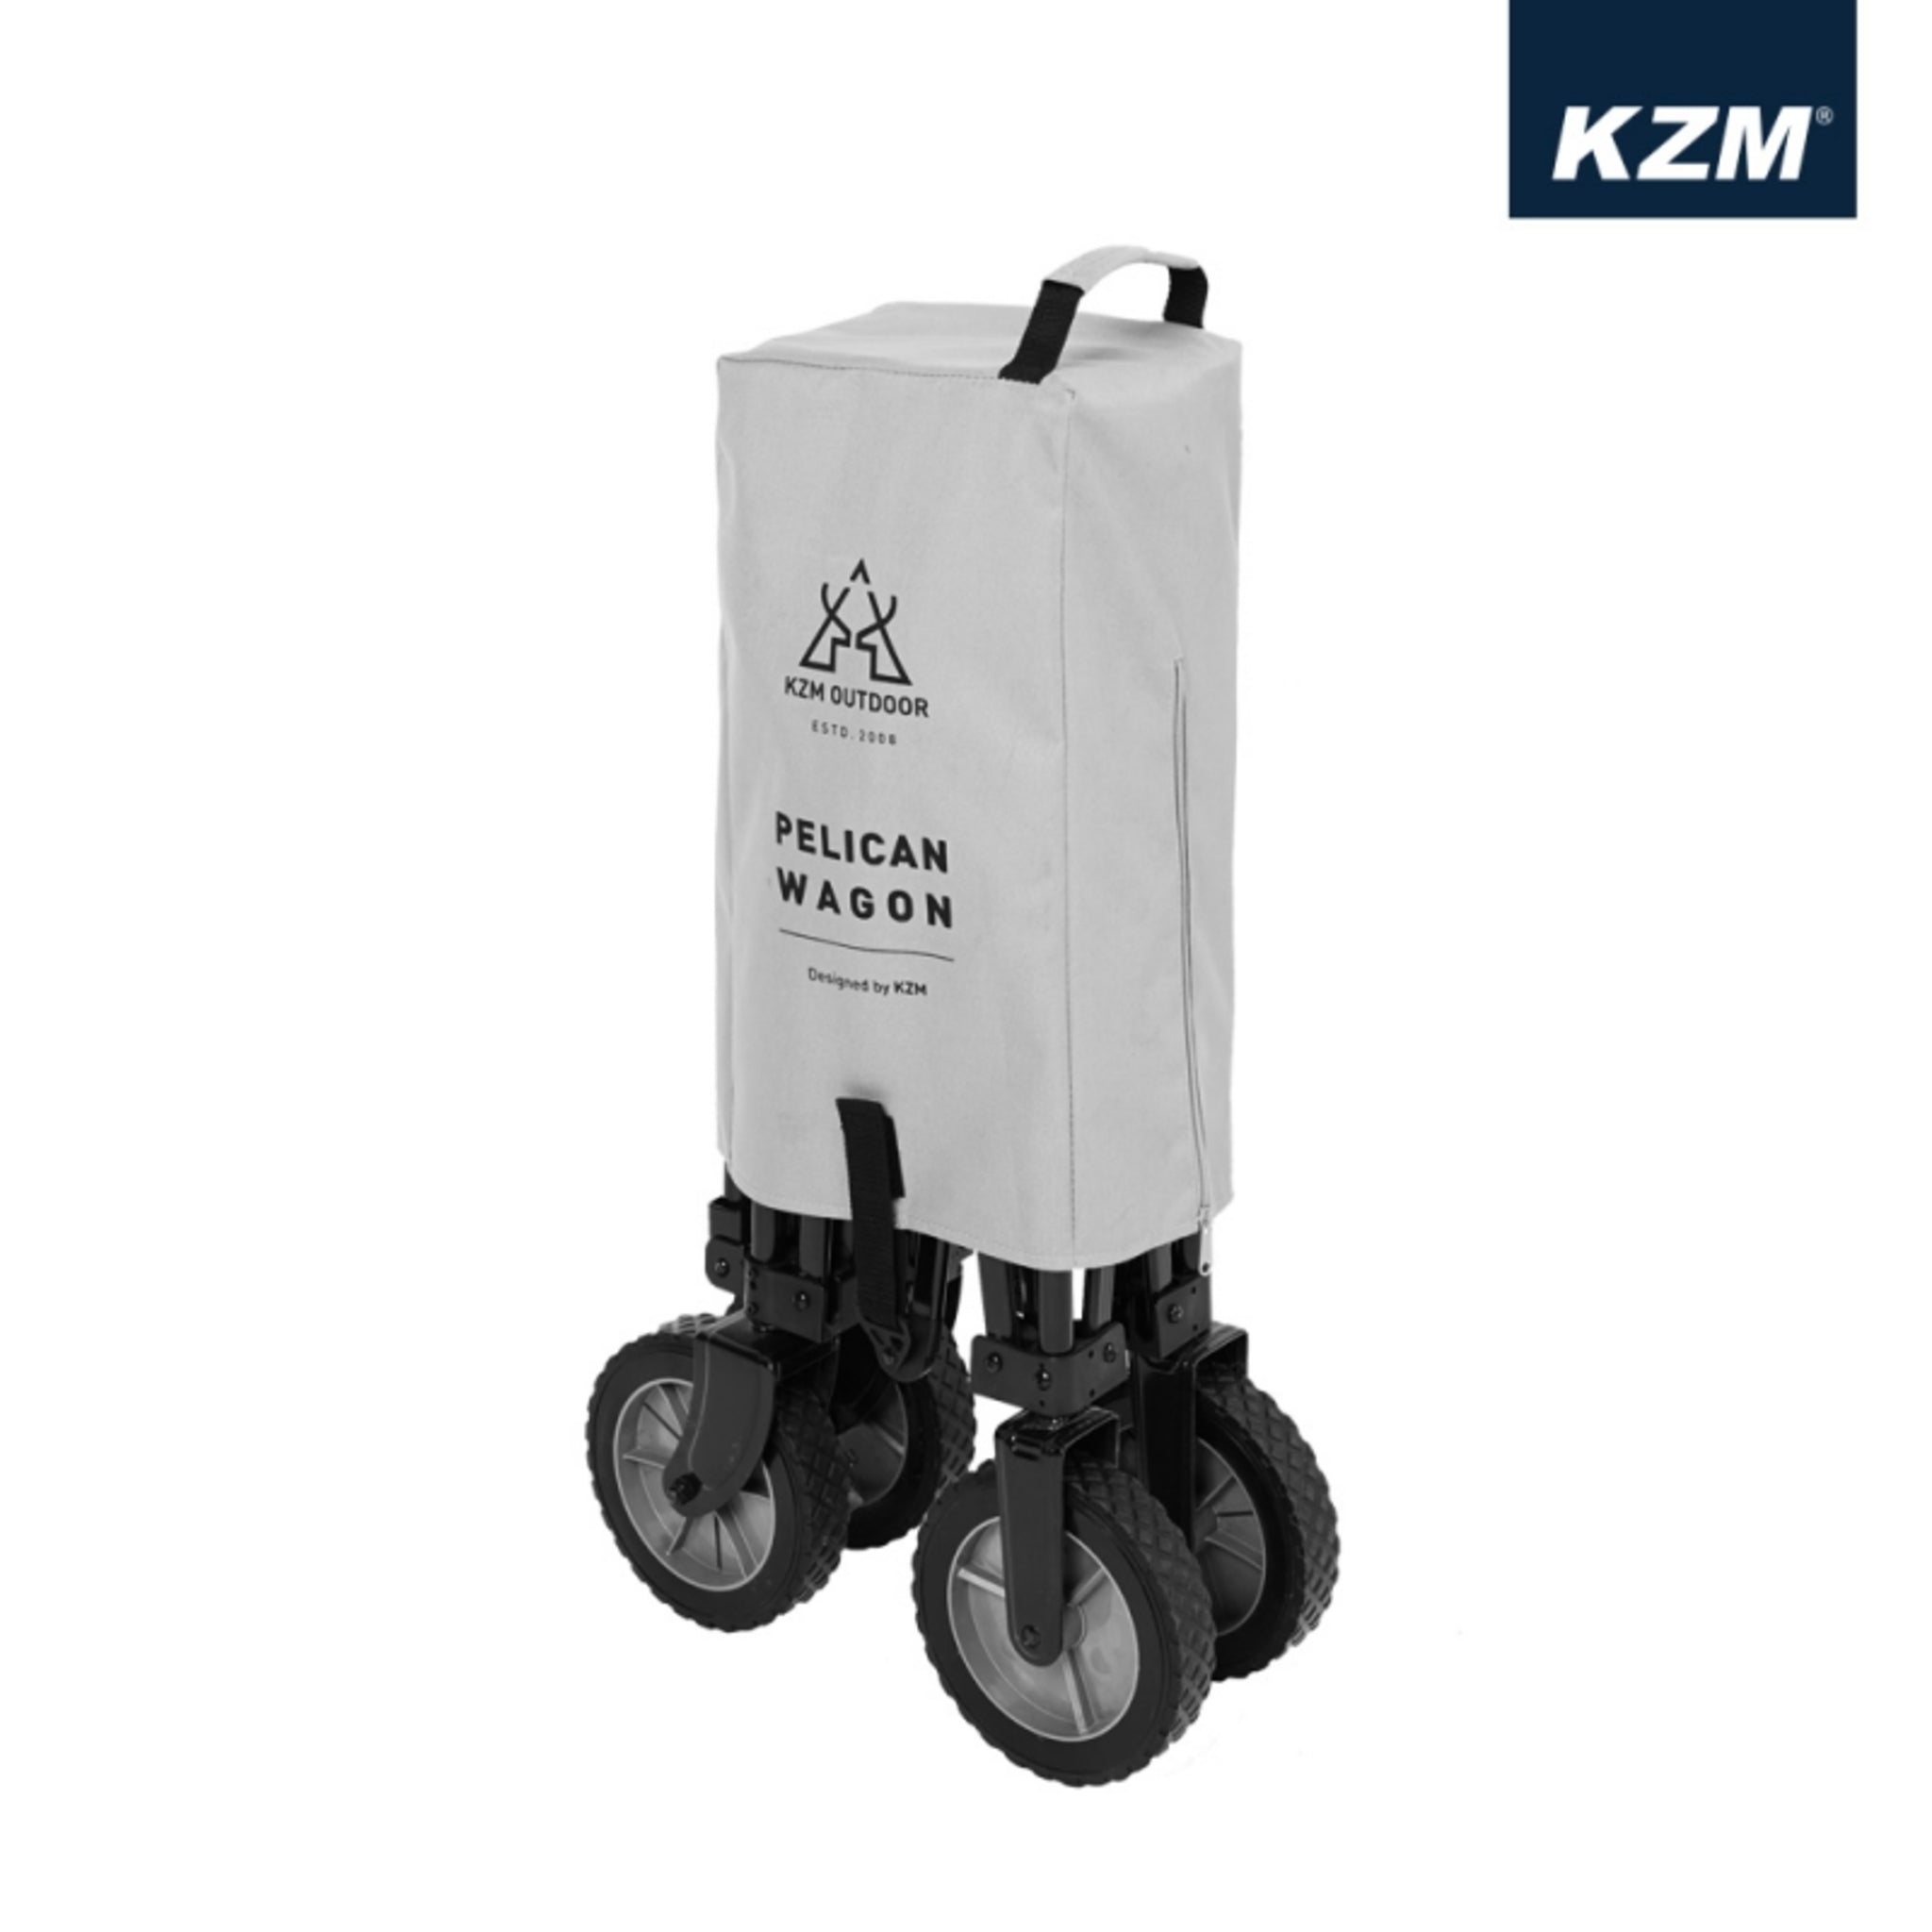 KAZMI KZM 多功能露營折疊手拉車 K20T1C013